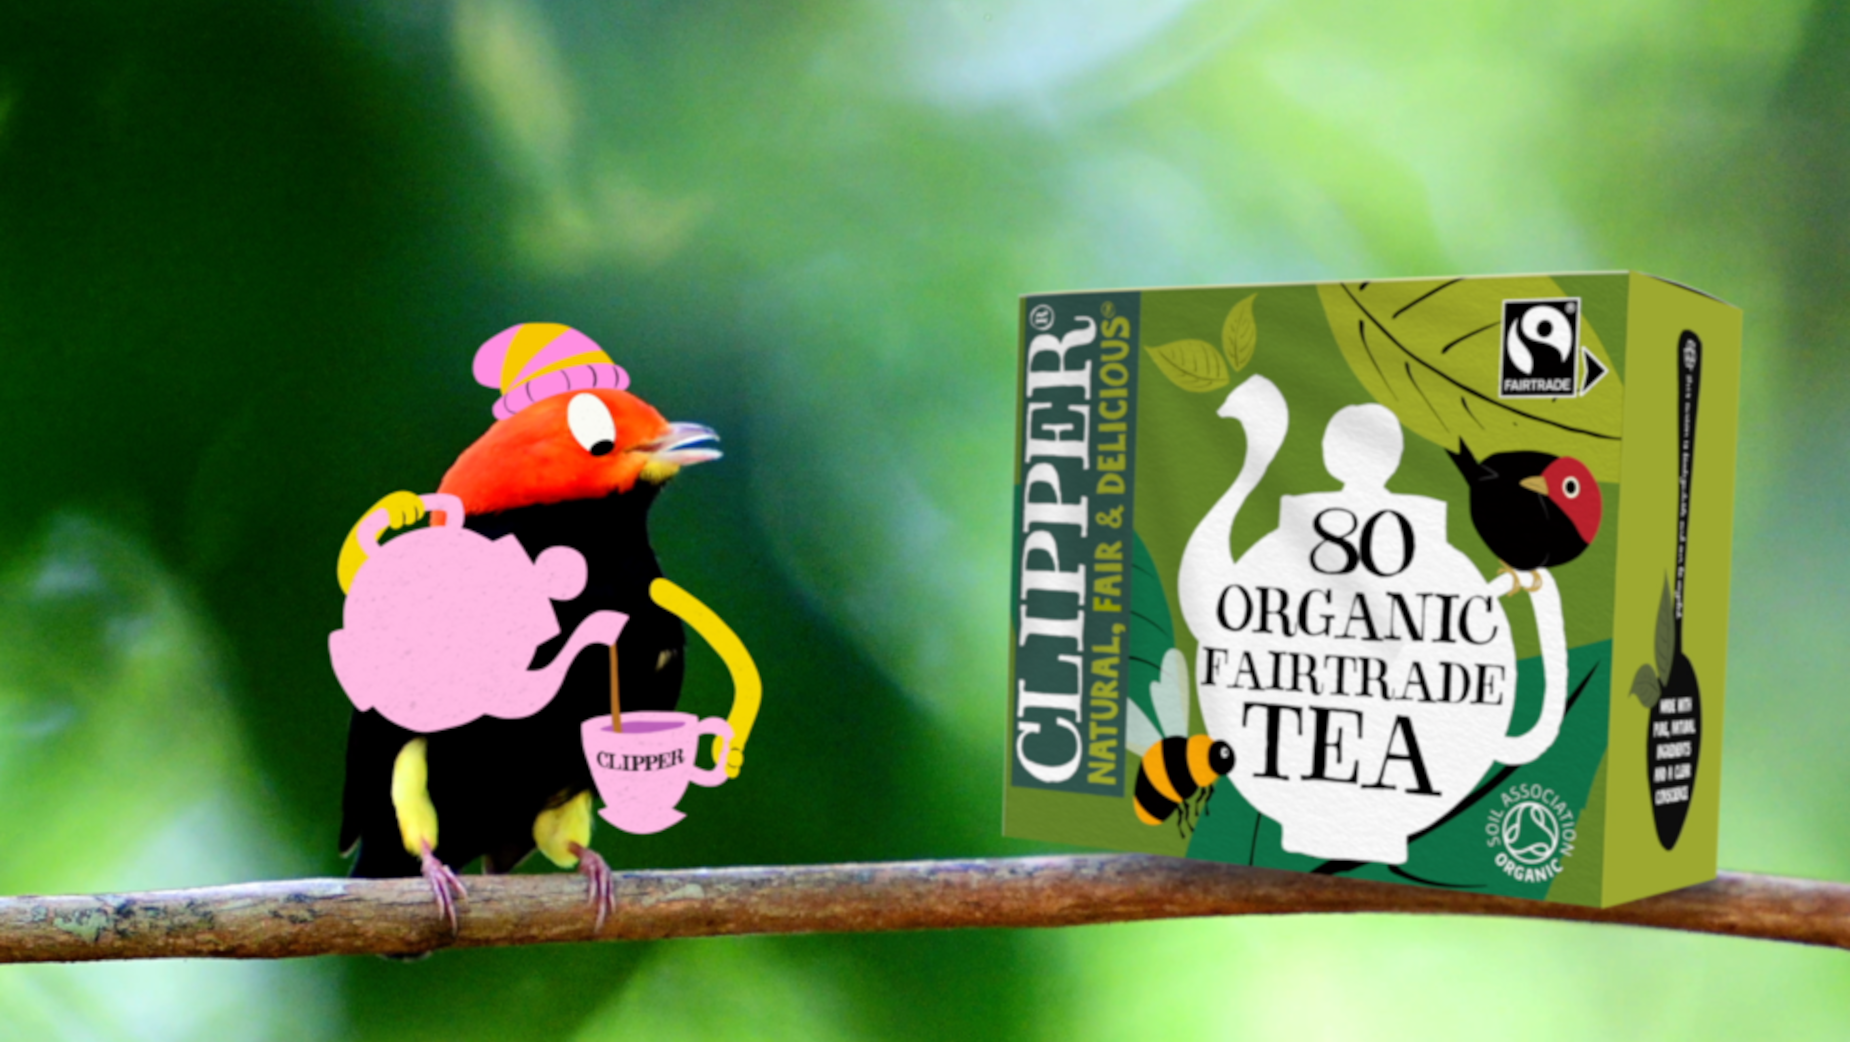 Clipper Tea Campaign Champions Nature Nurturing Tea